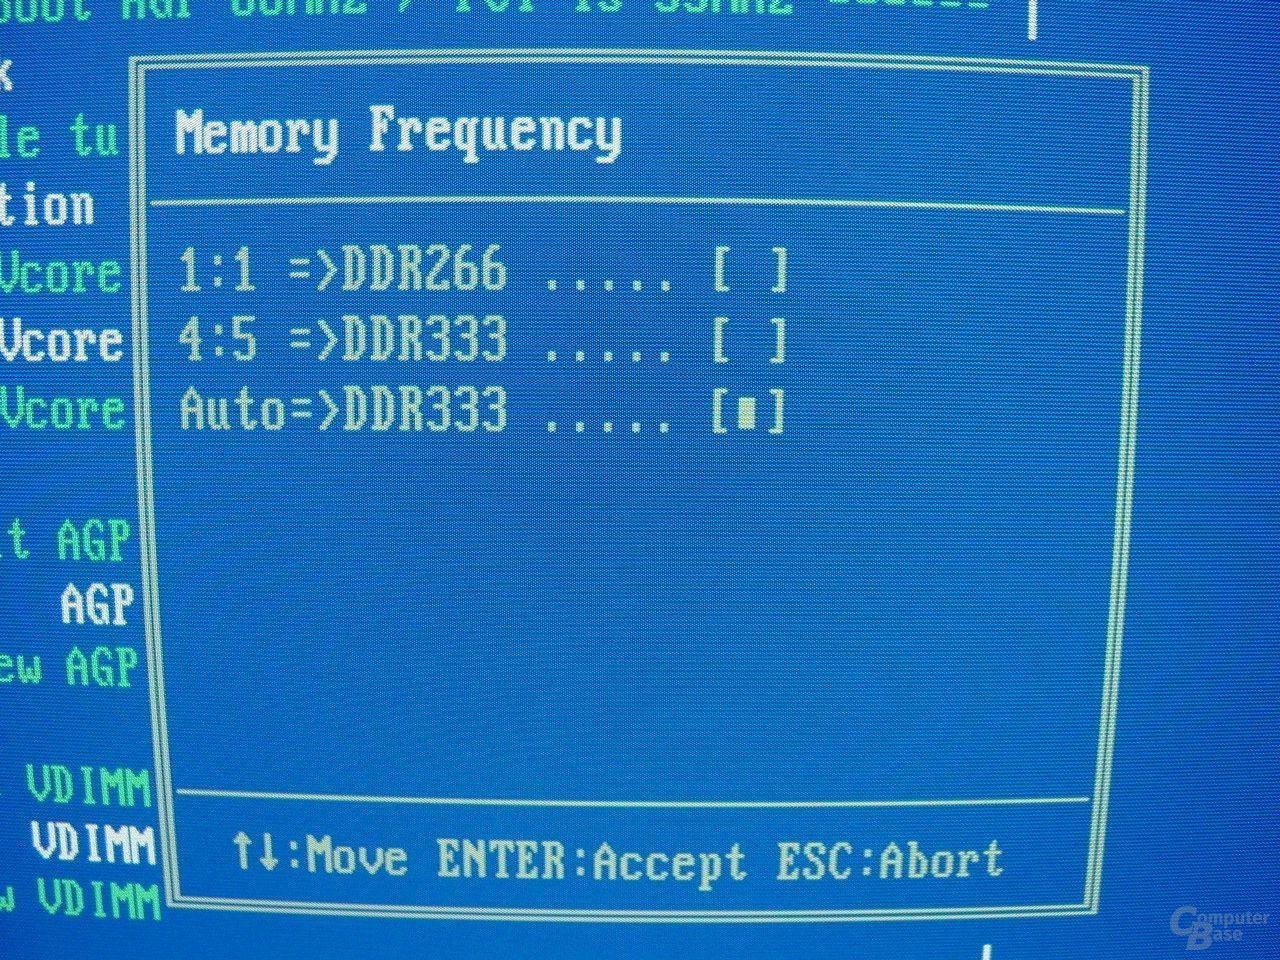 EP-4GEAEI - BIOS - Memory-MHz